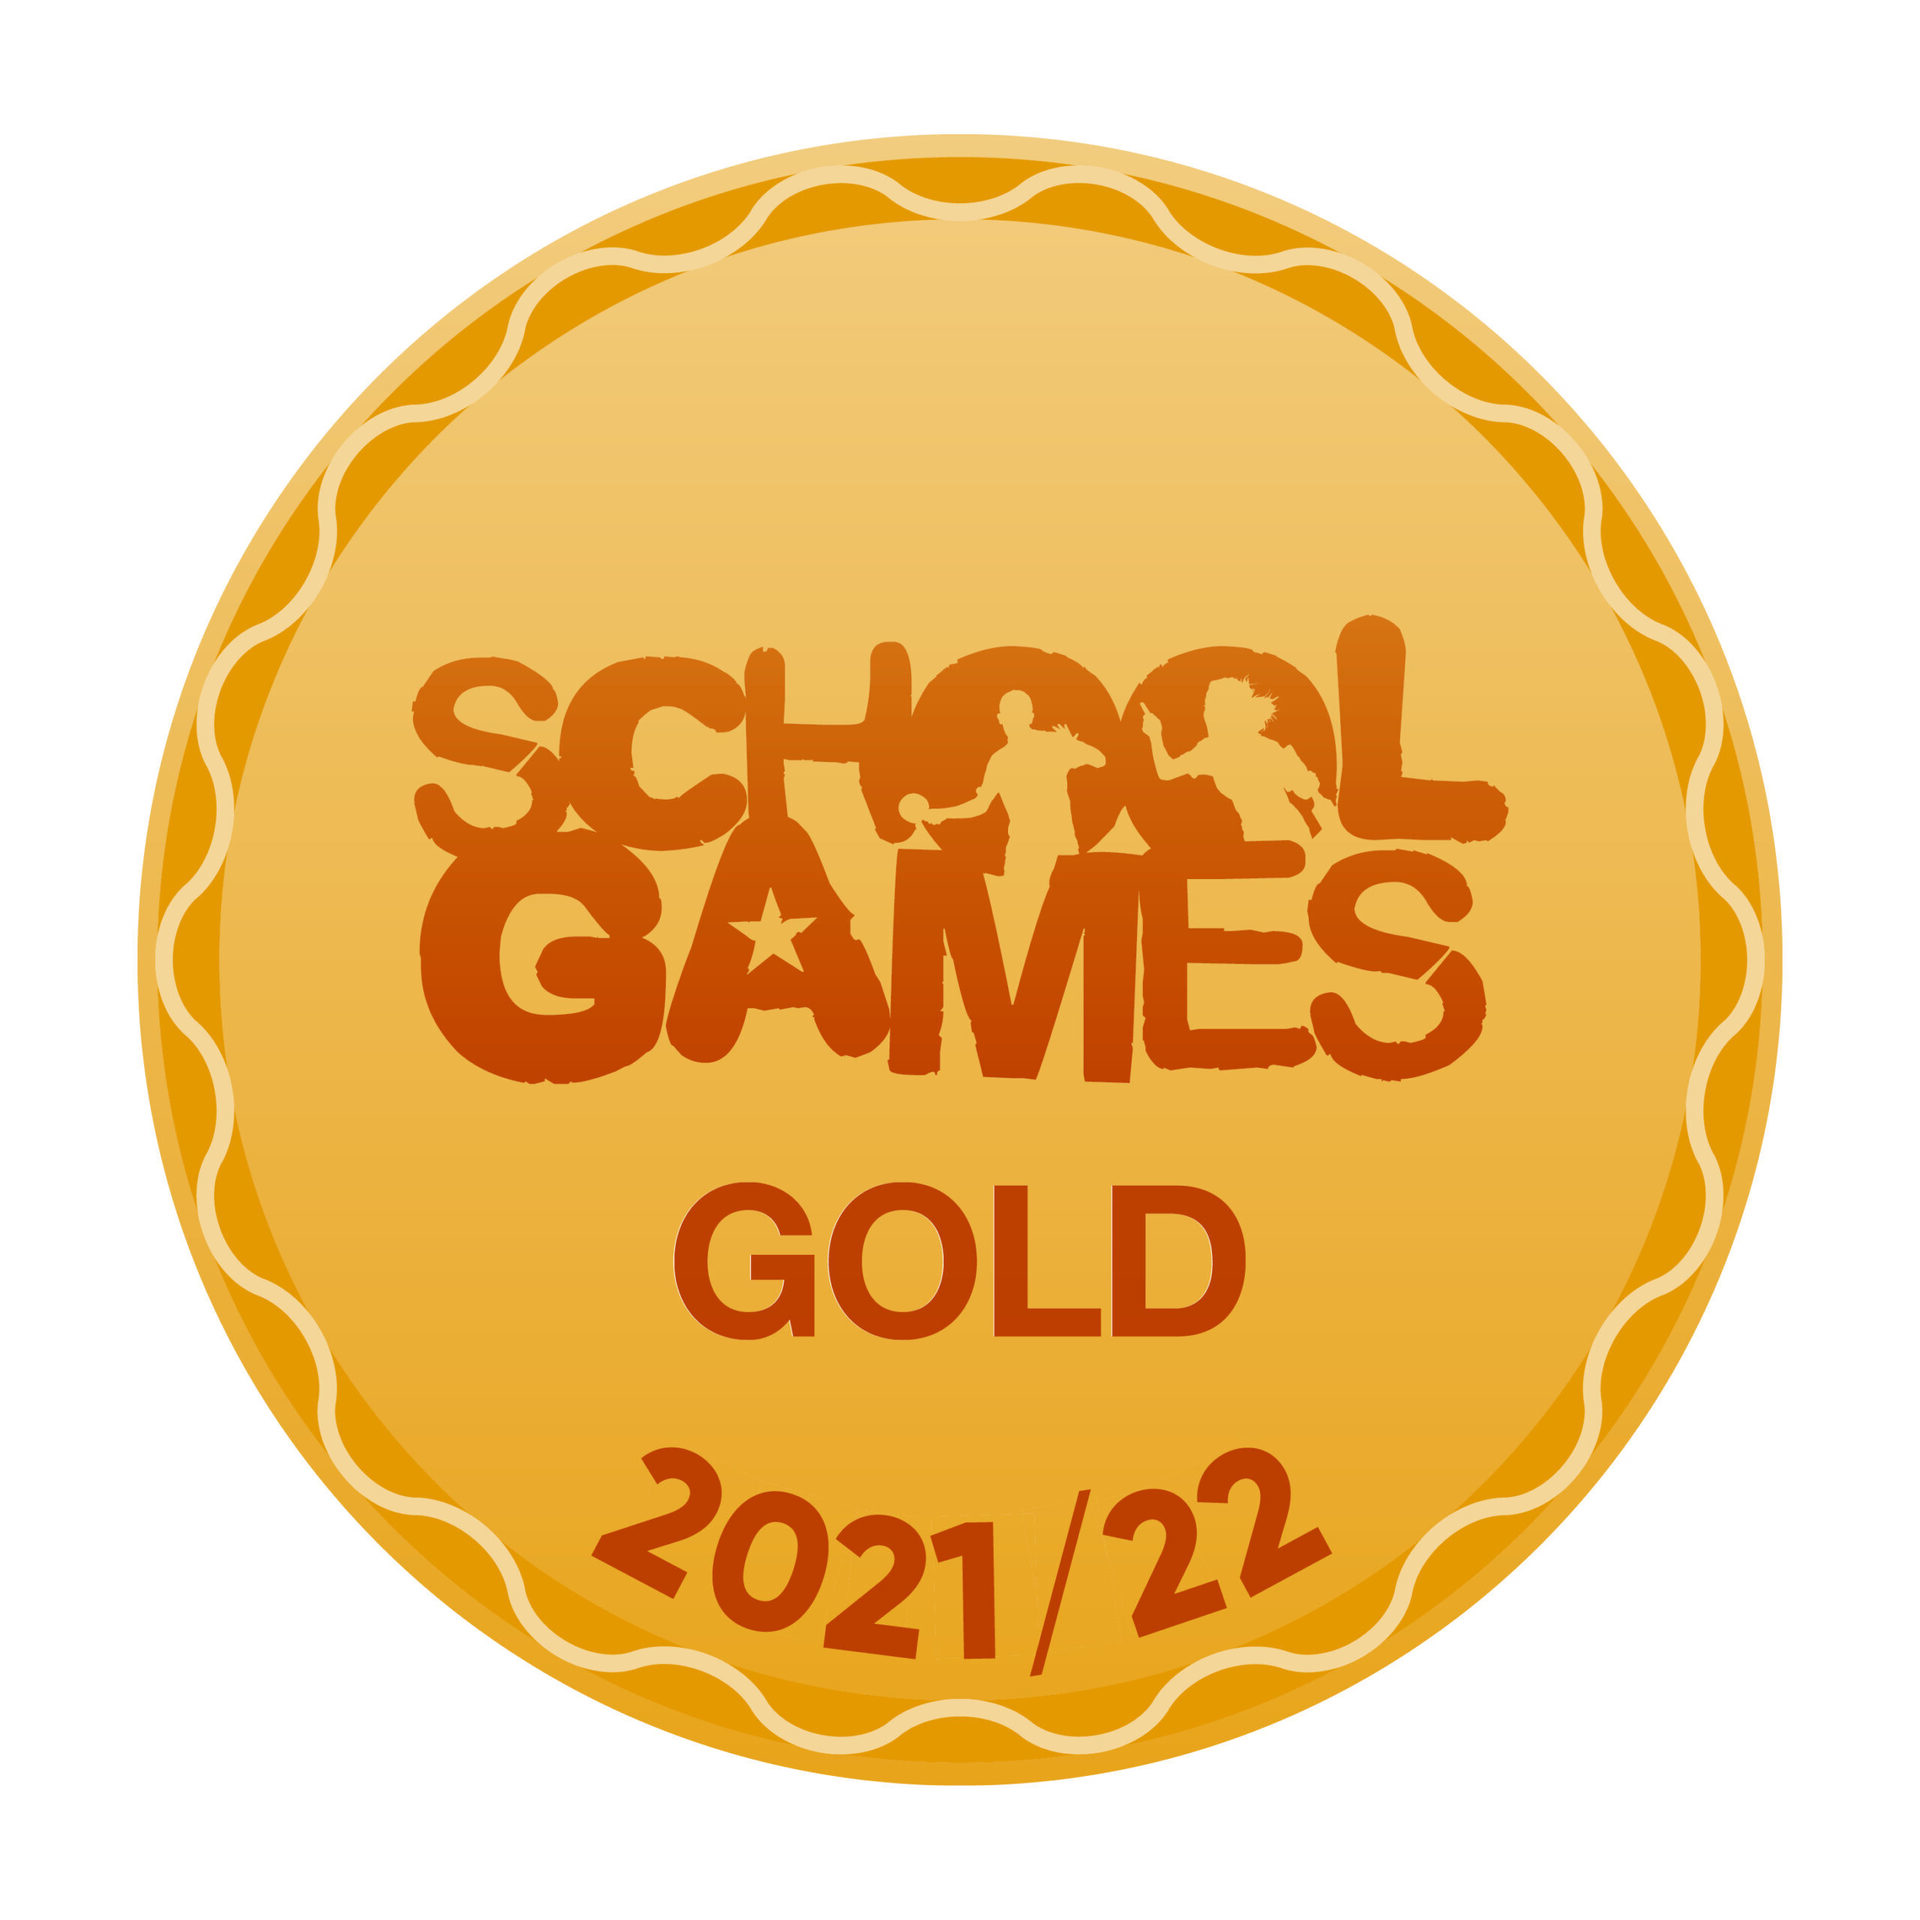 School Games Gold Award 2021 22